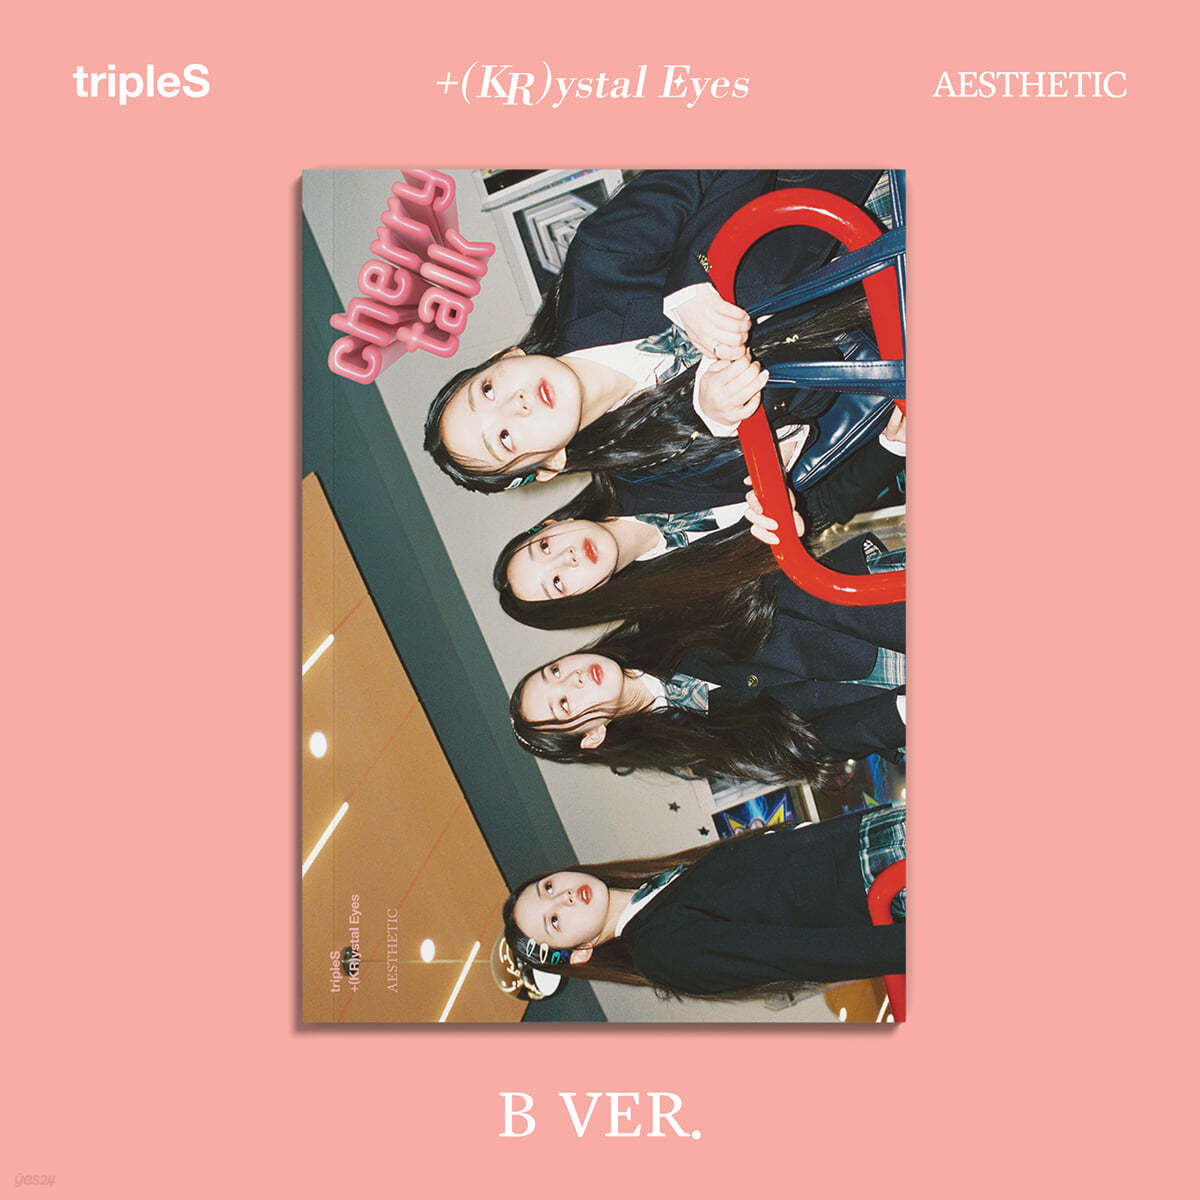 tripleS (트리플에스) - 미니앨범 : +(KR)ystal Eyes [AESTHETIC][B VER.]